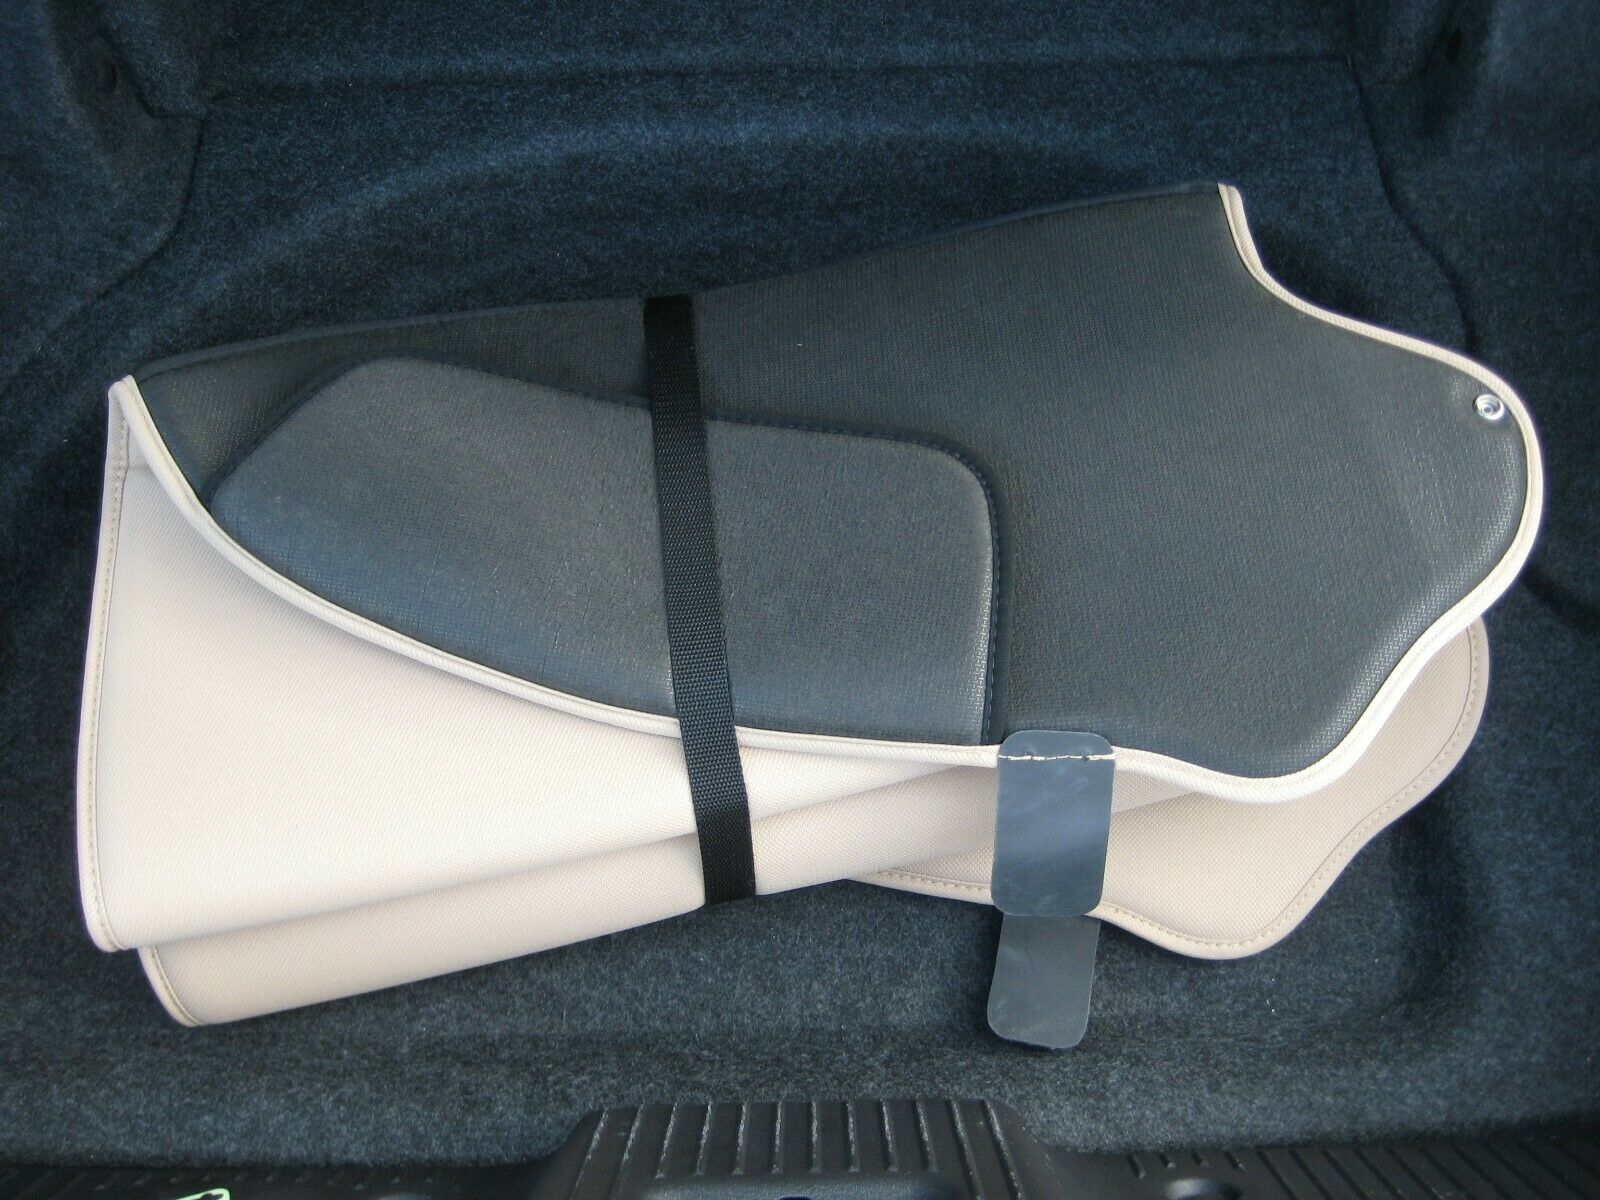 2004 thunderbird convertible top boot